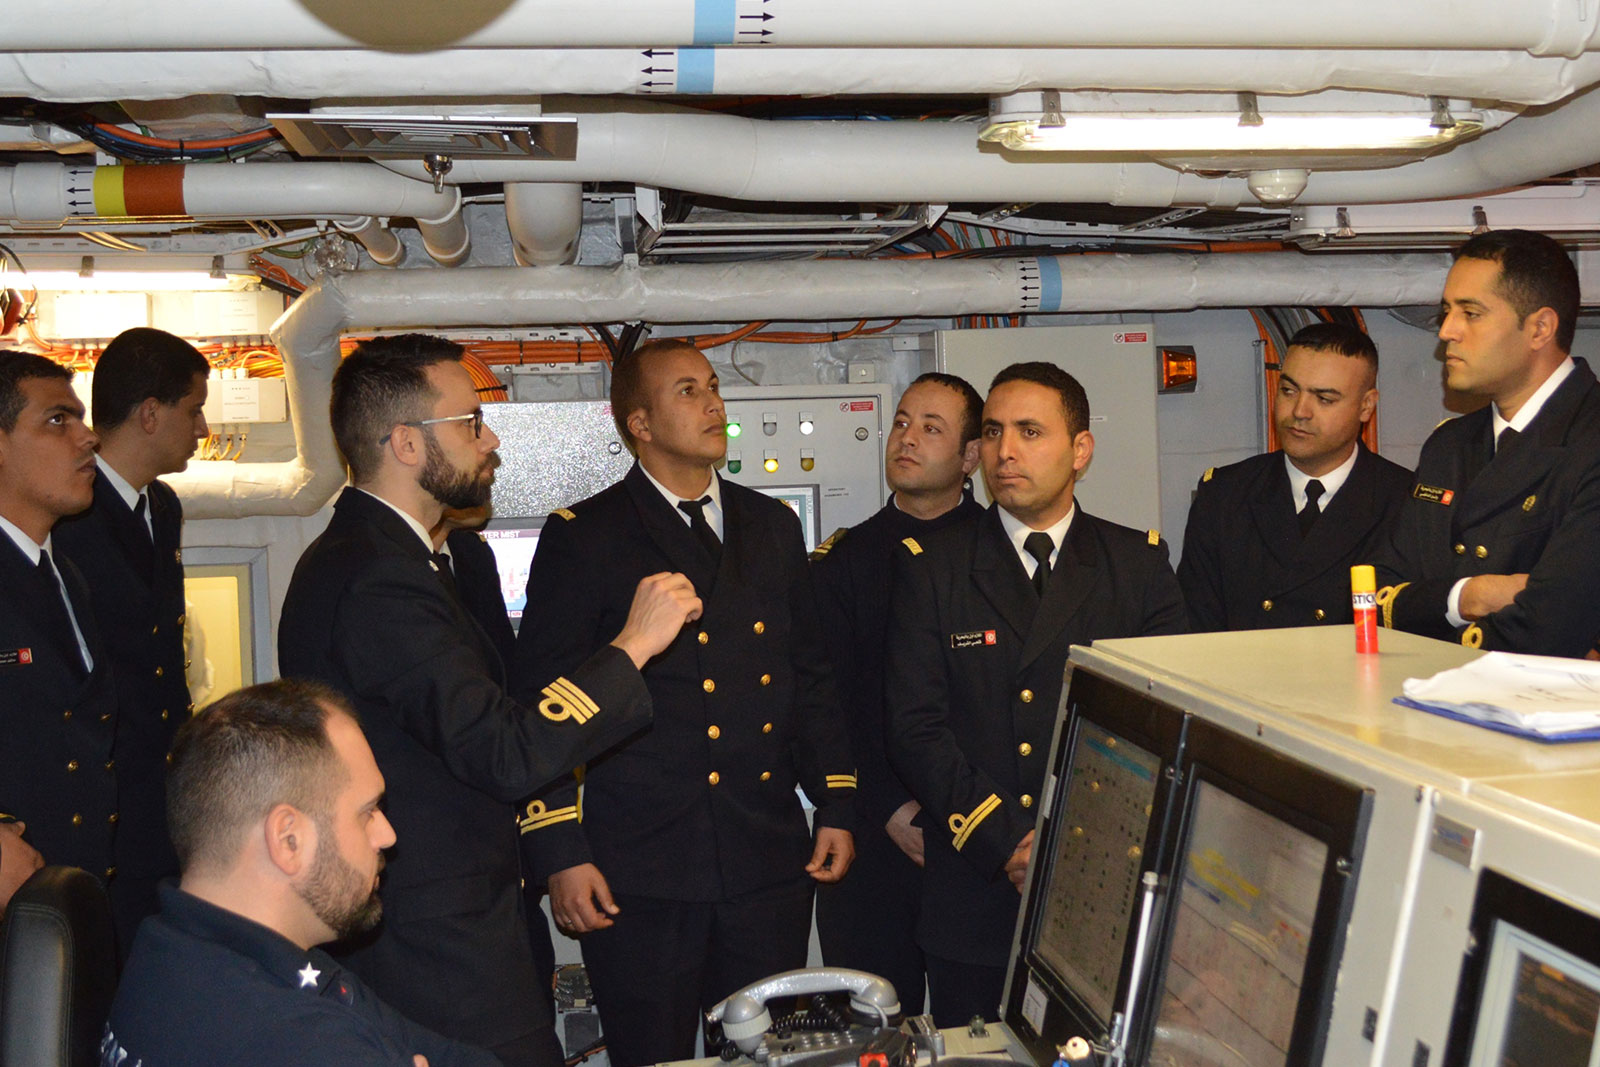 Chief of the Italian Fleet meets the Chief of the Tunisian Navy